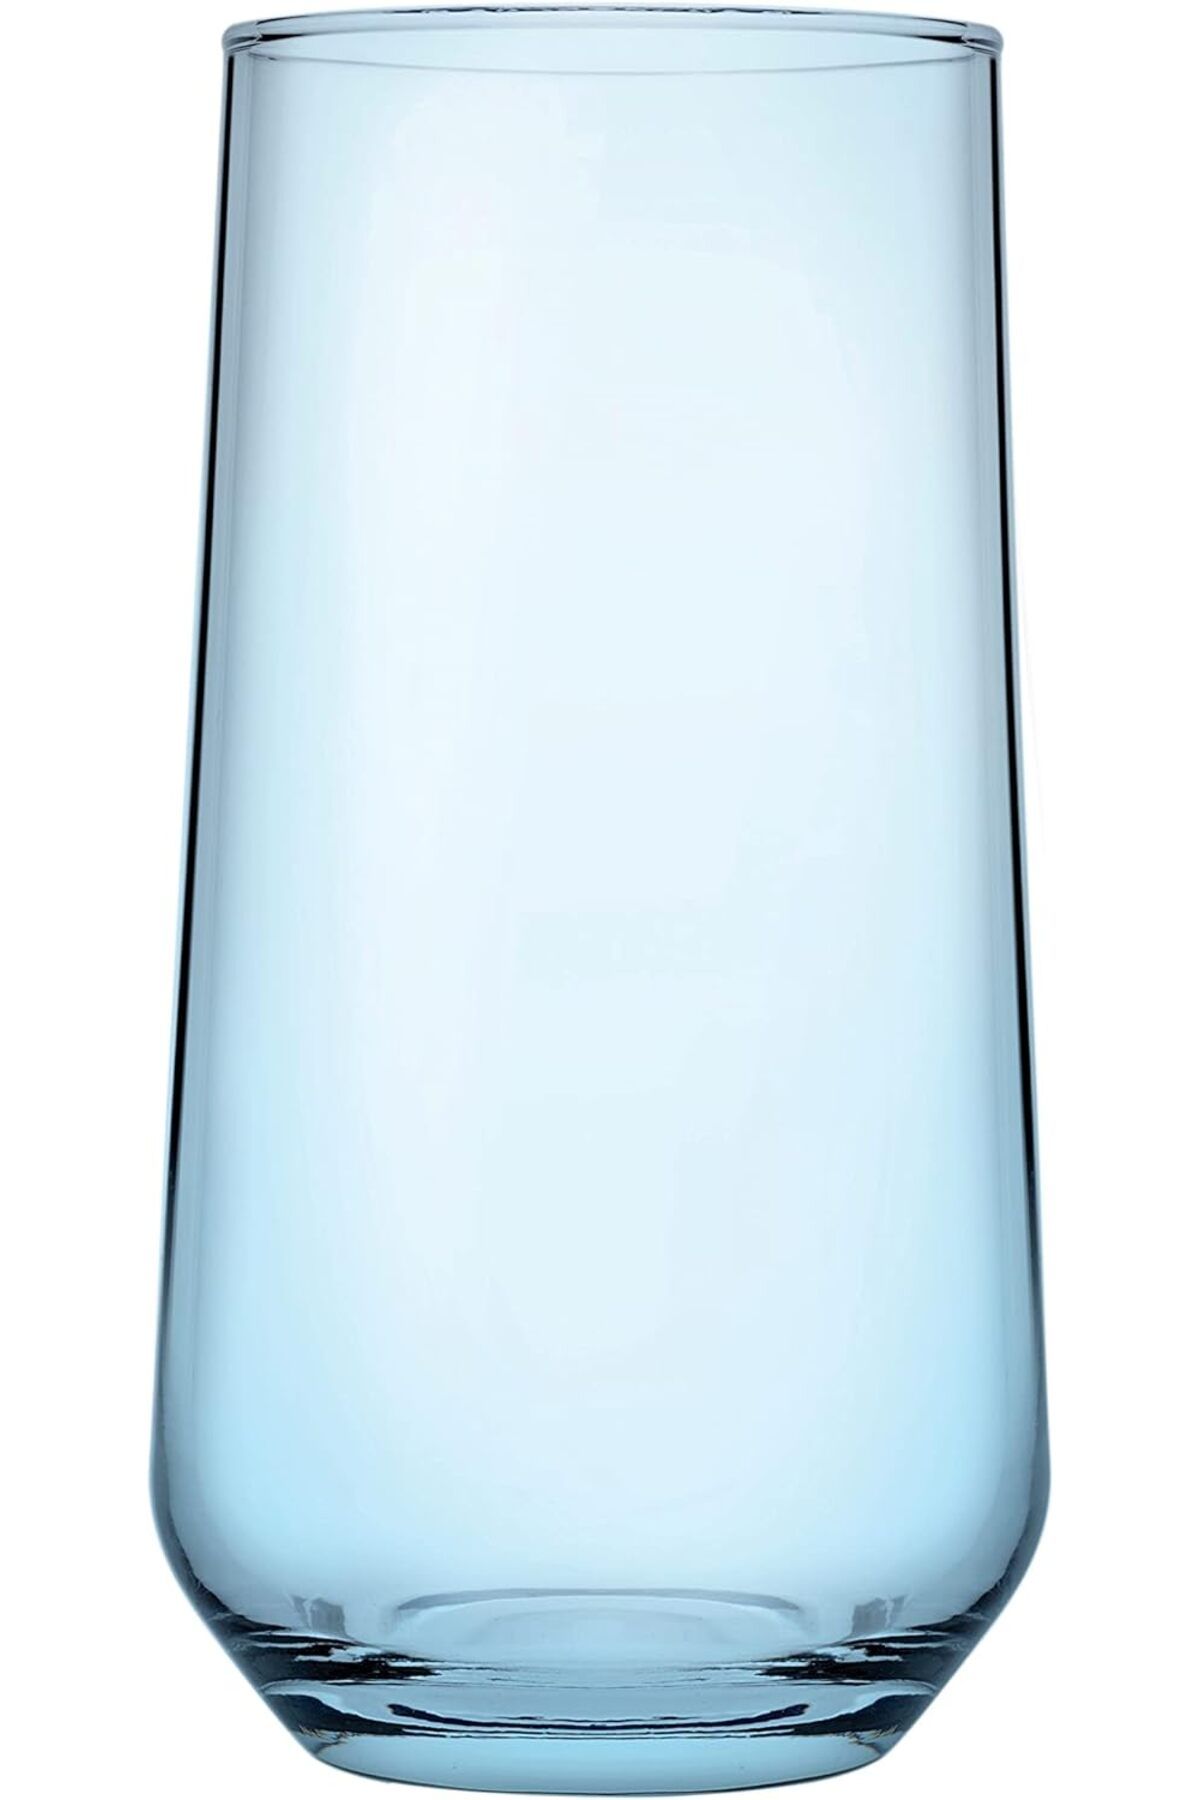 Genel Markalar Allegra Meşrubat Bardağı, 6'lı, 470 cc, Turkuaz